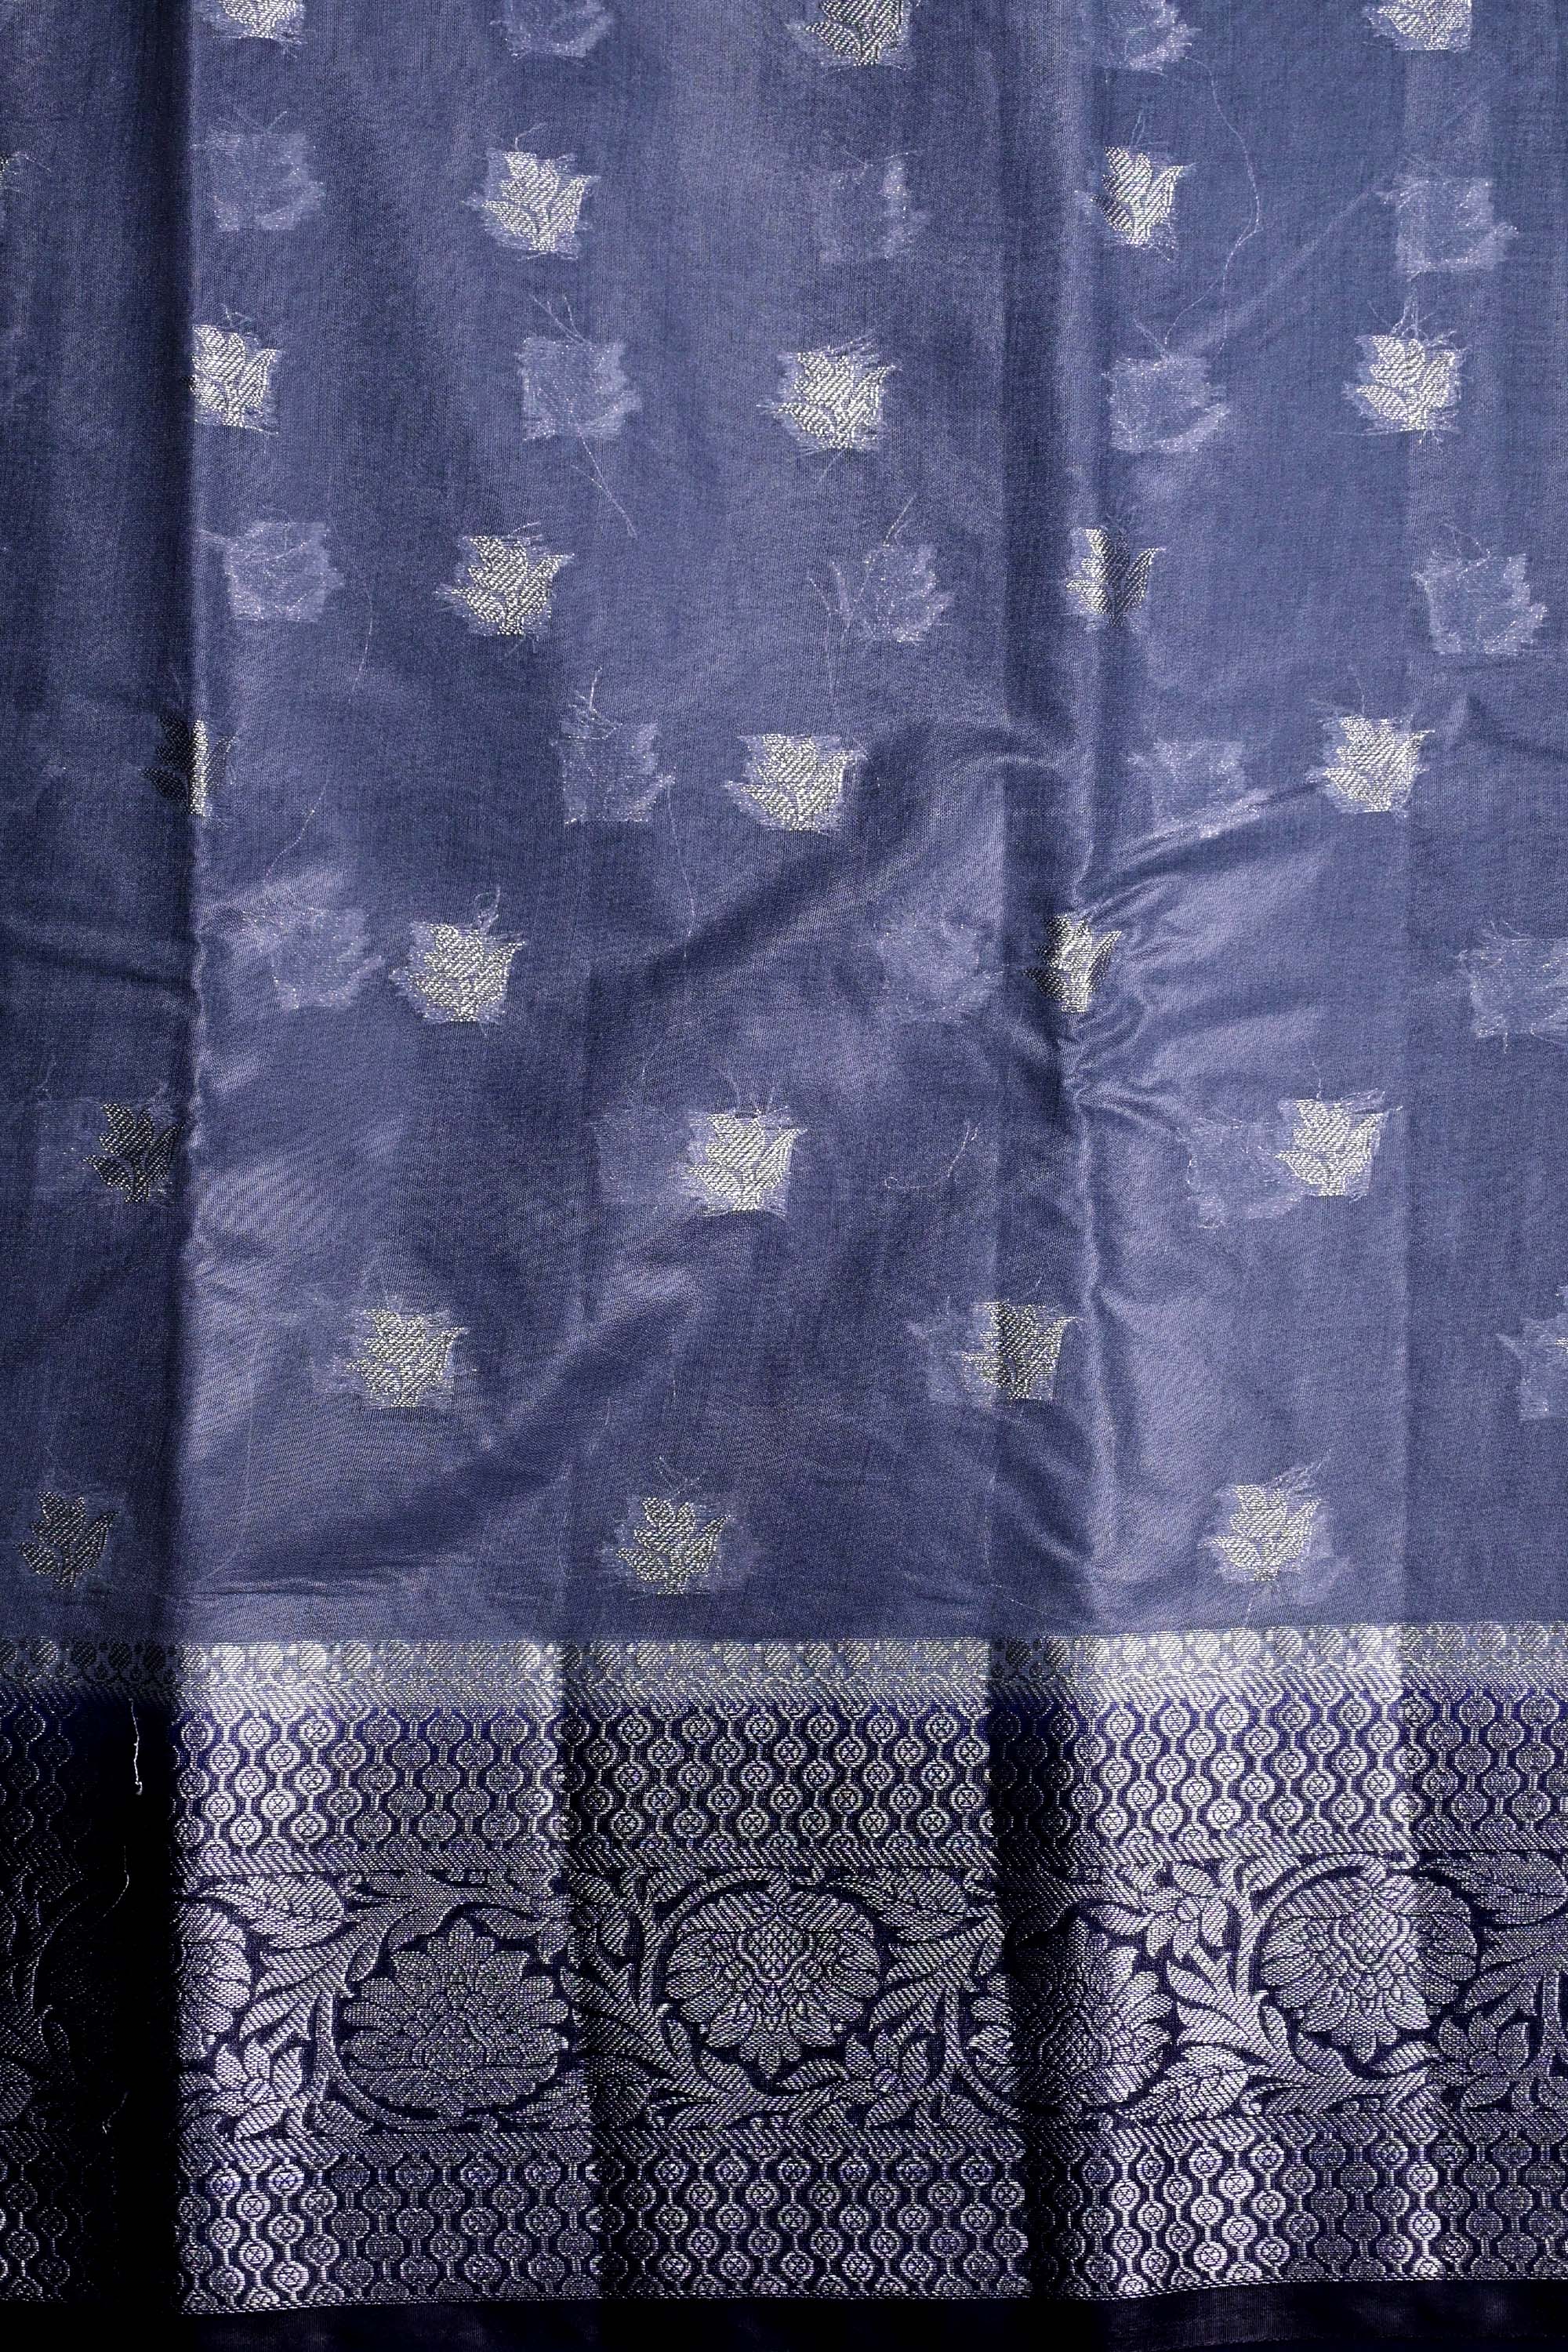 Kora fancy saree grey and blue with silver zari motives, kaddi border and plain blouse